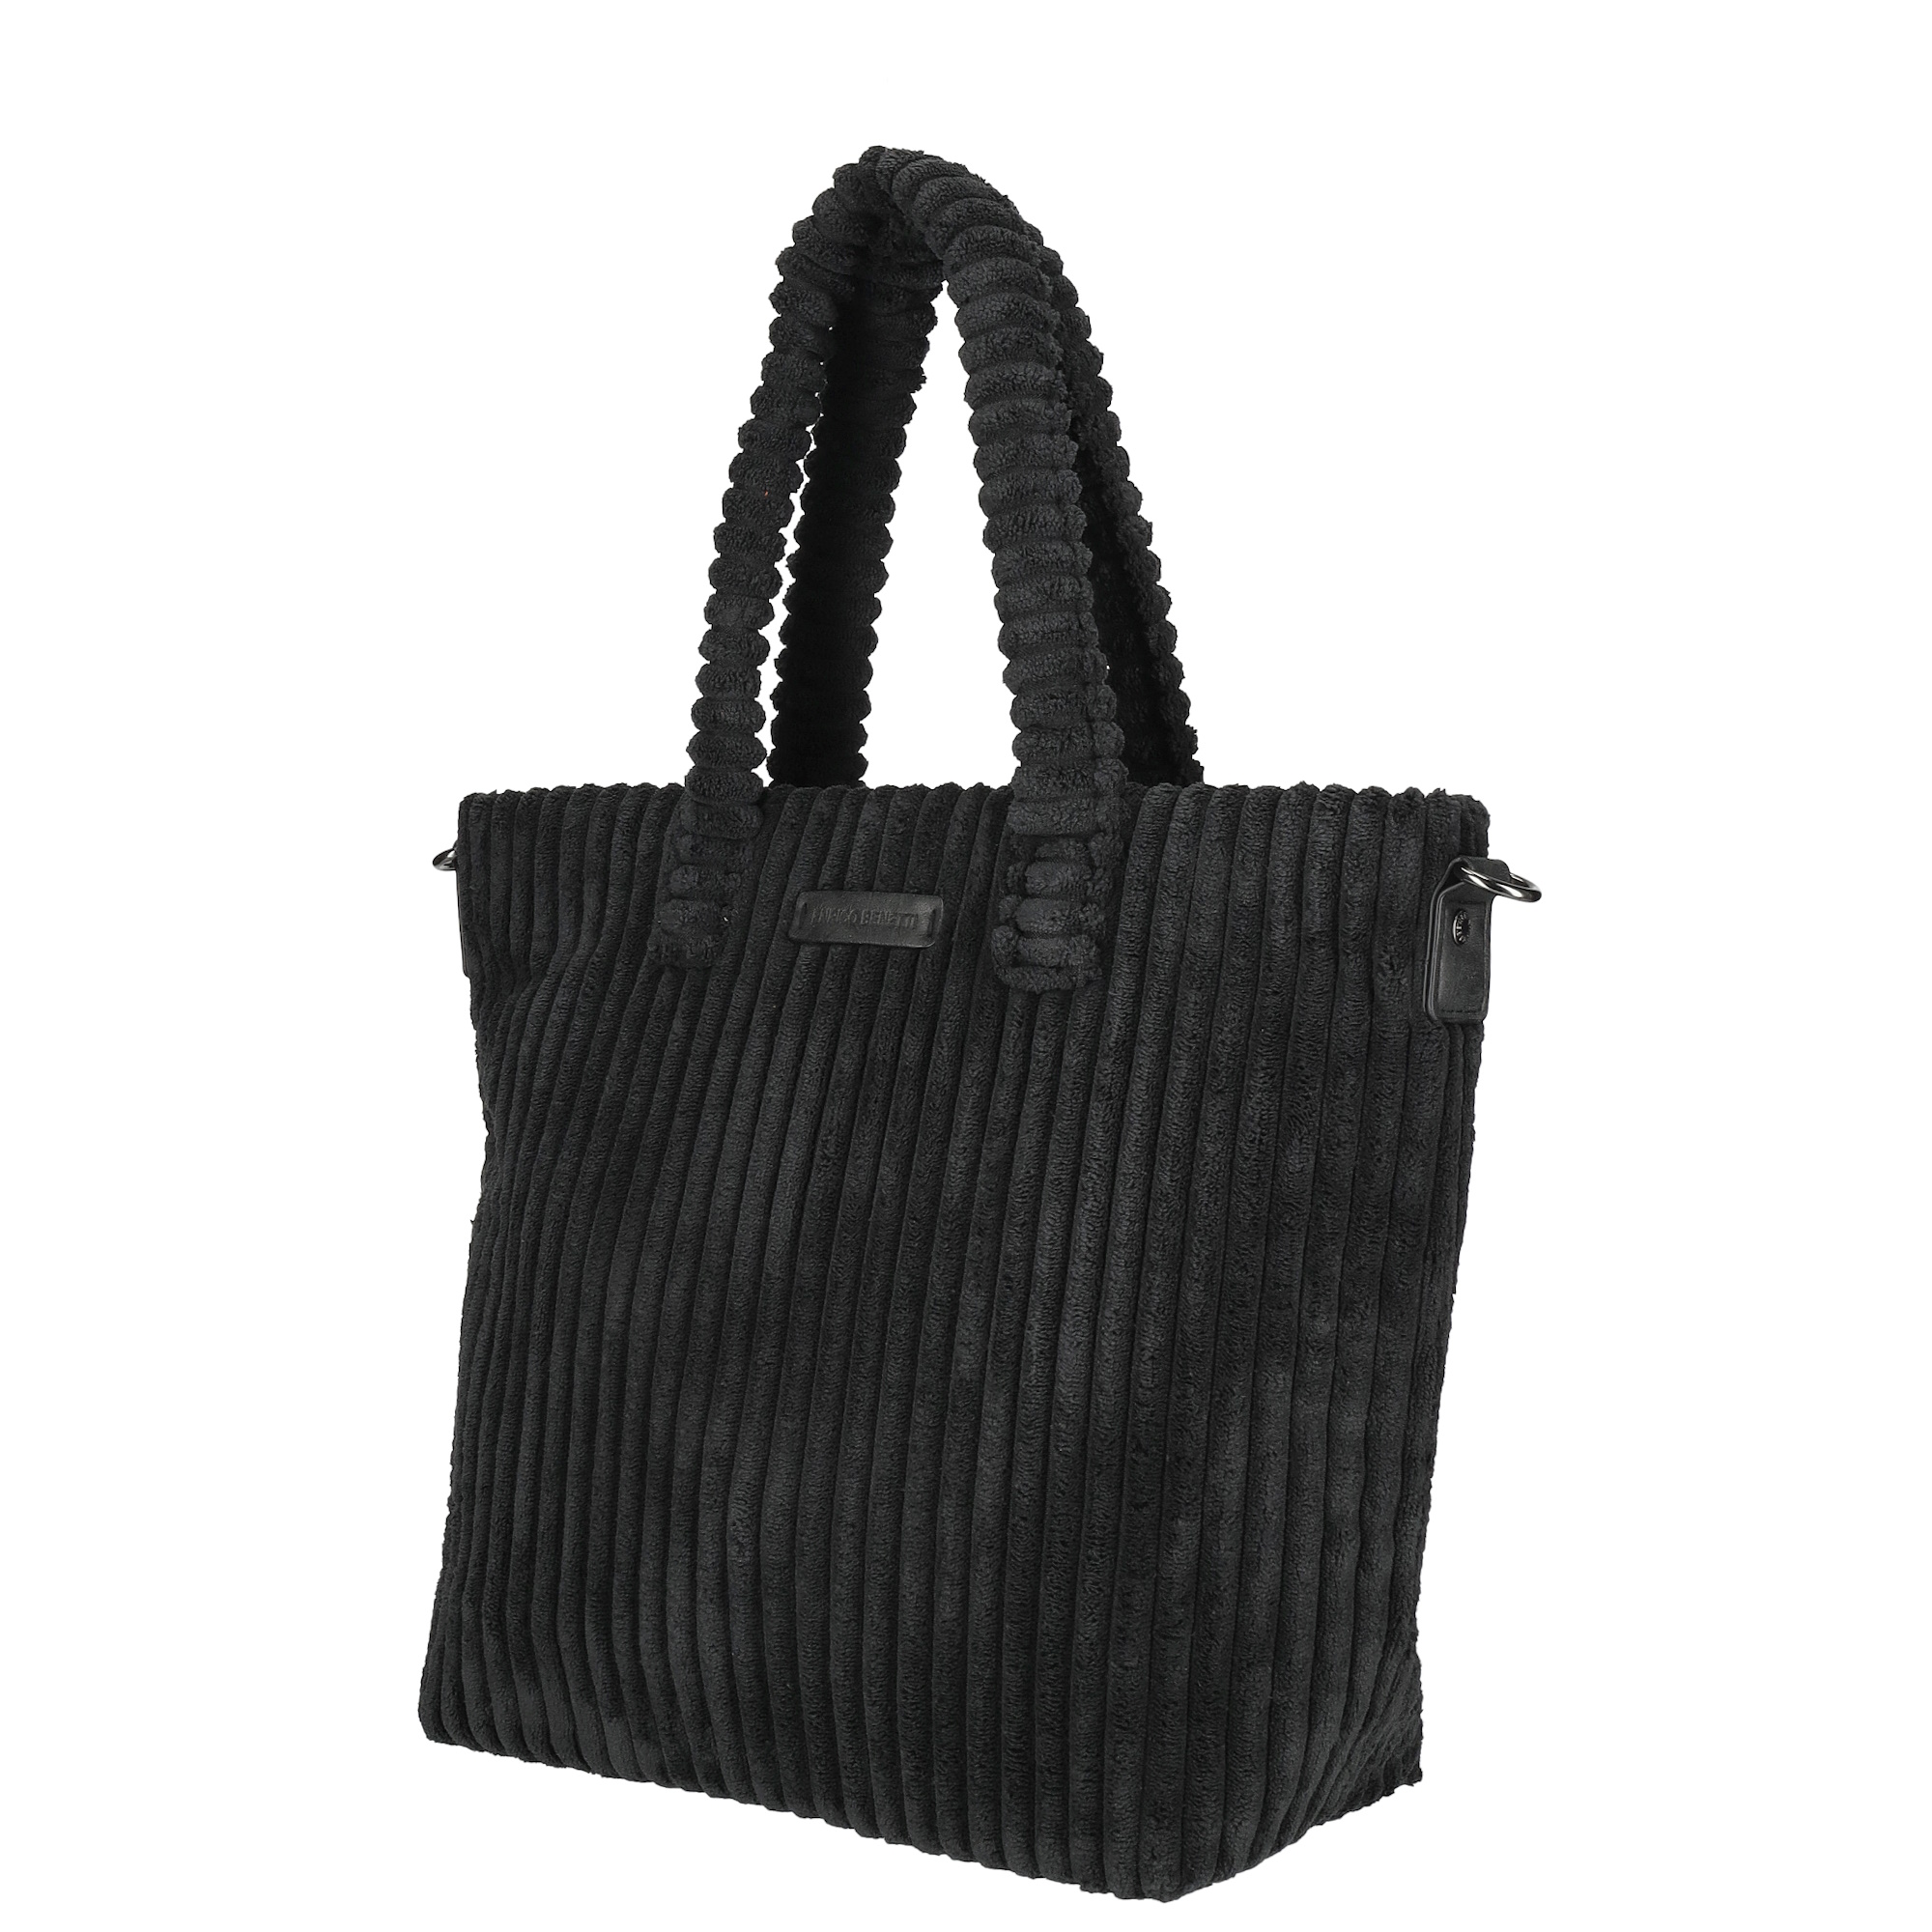 Enrico Benetti Rosie large handbag black